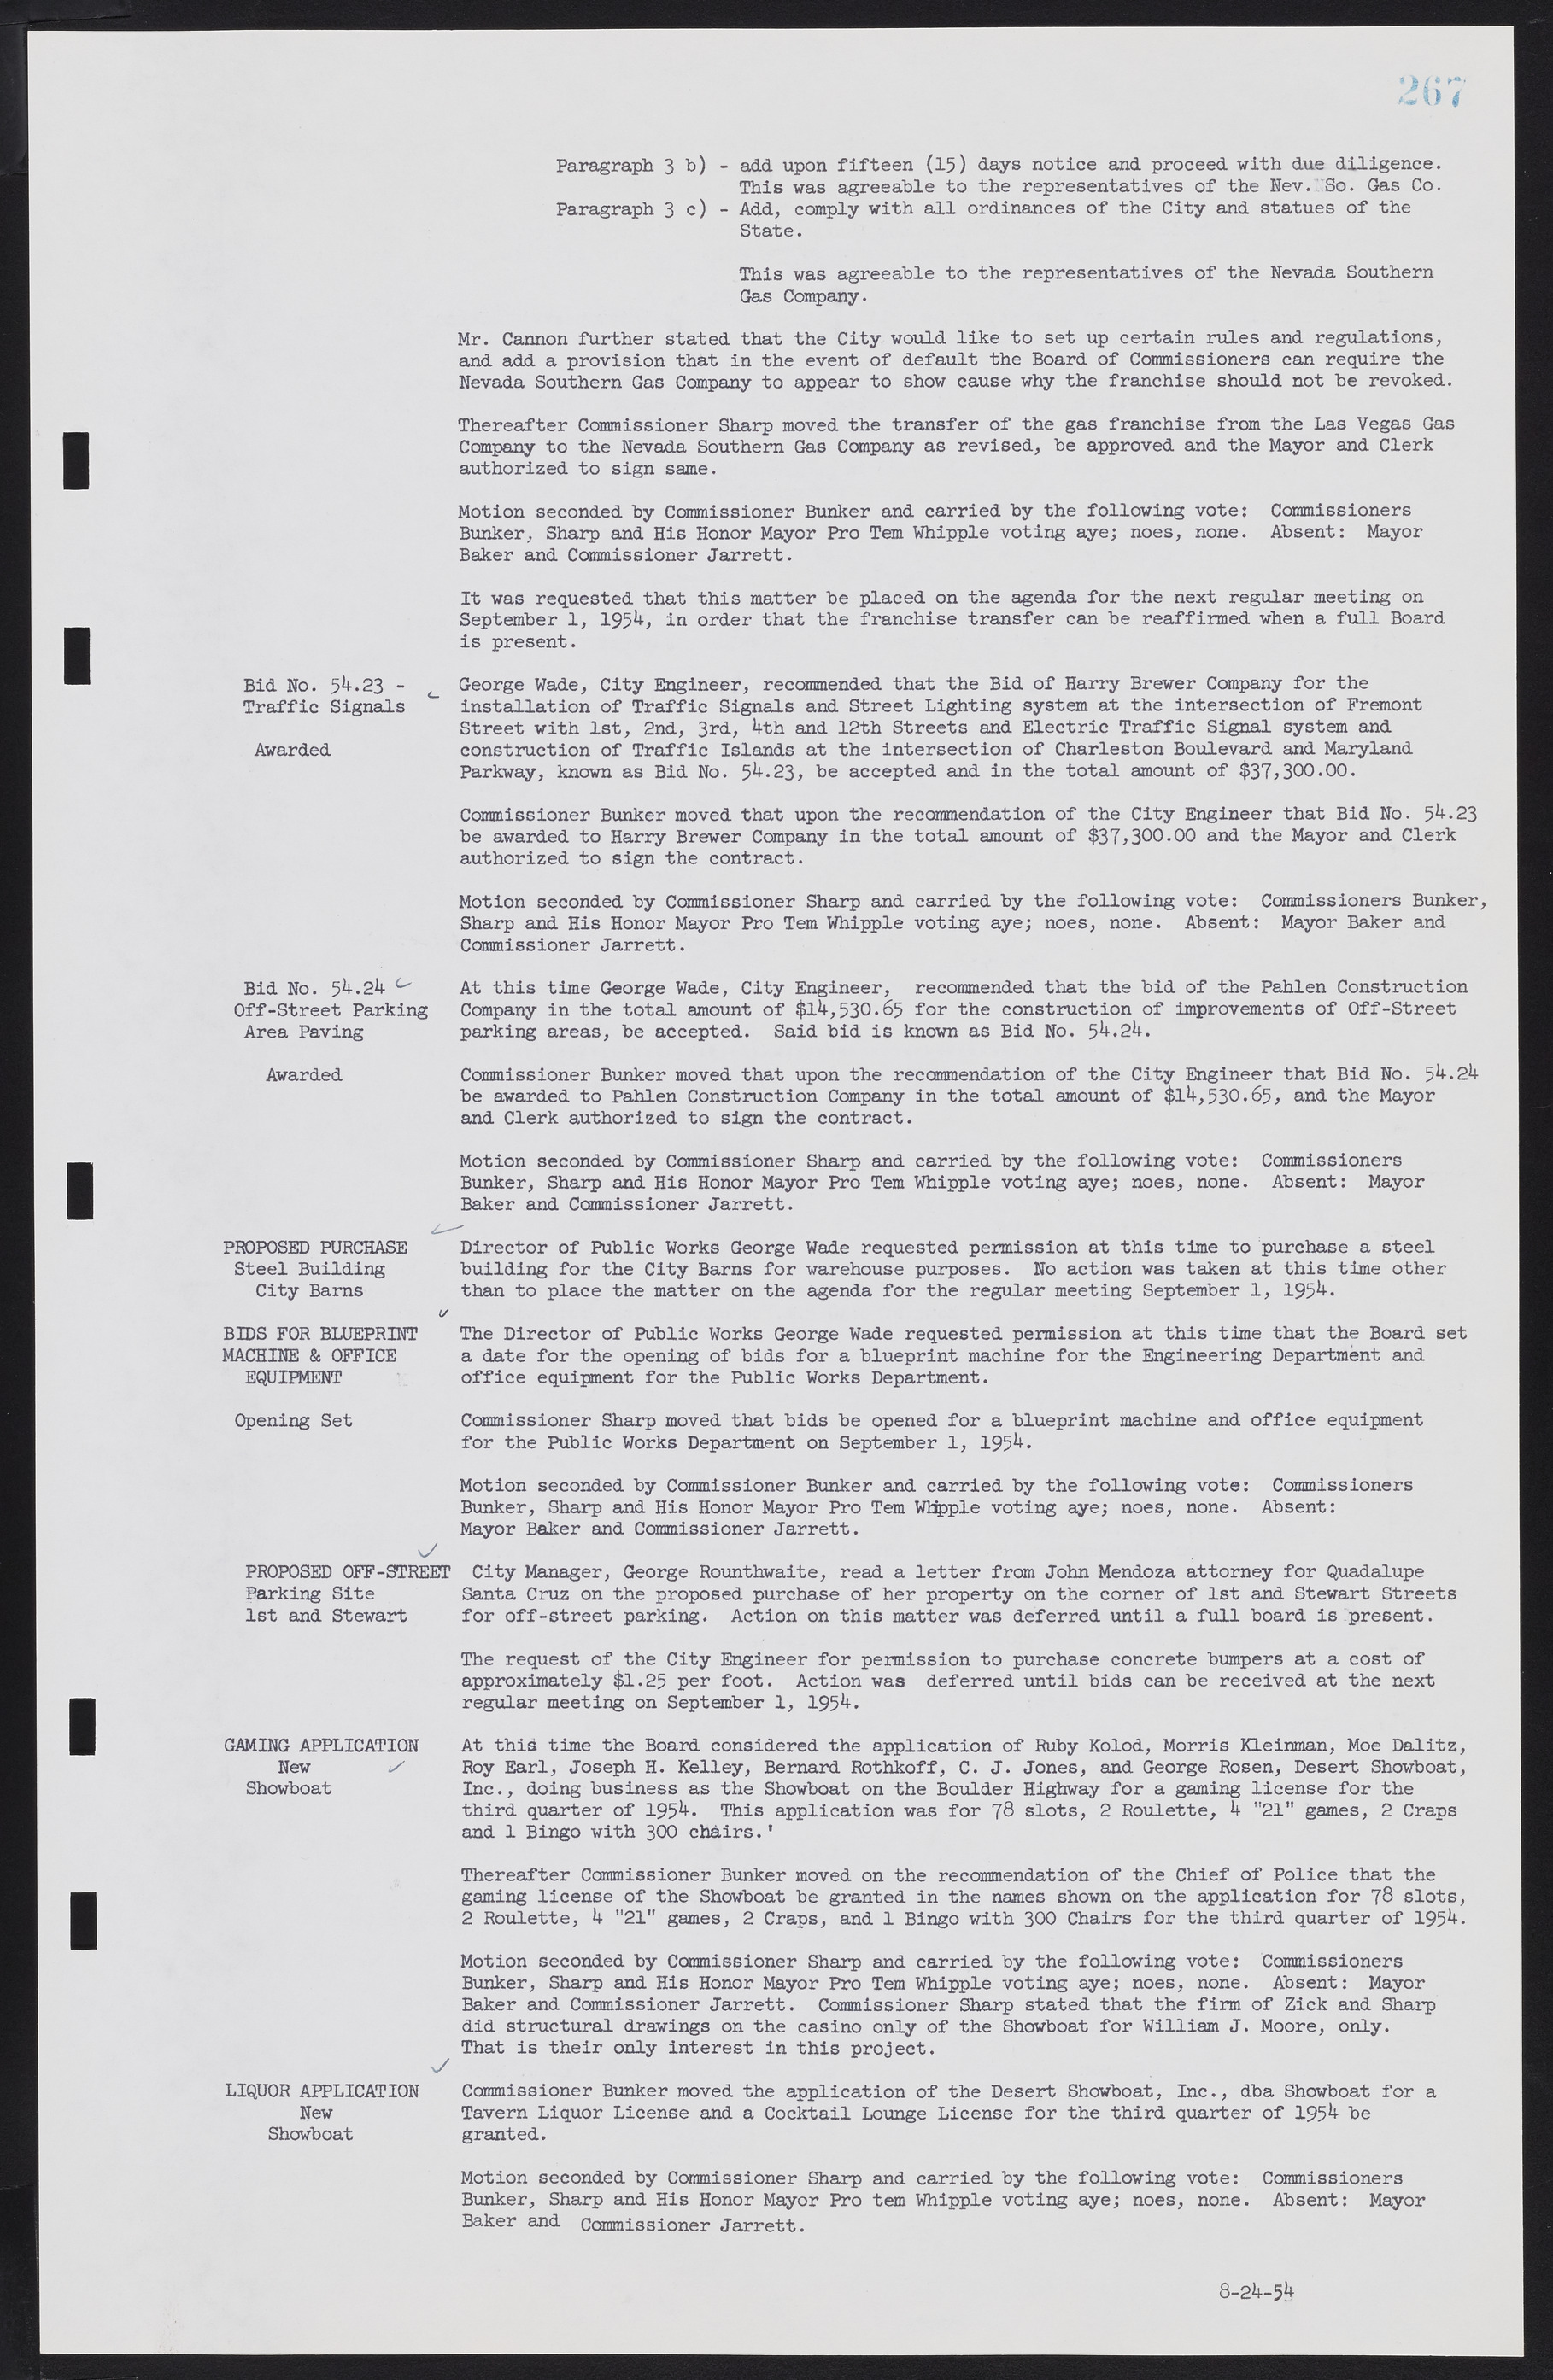 Las Vegas City Commission Minutes, February 17, 1954 to September 21, 1955, lvc000009-273